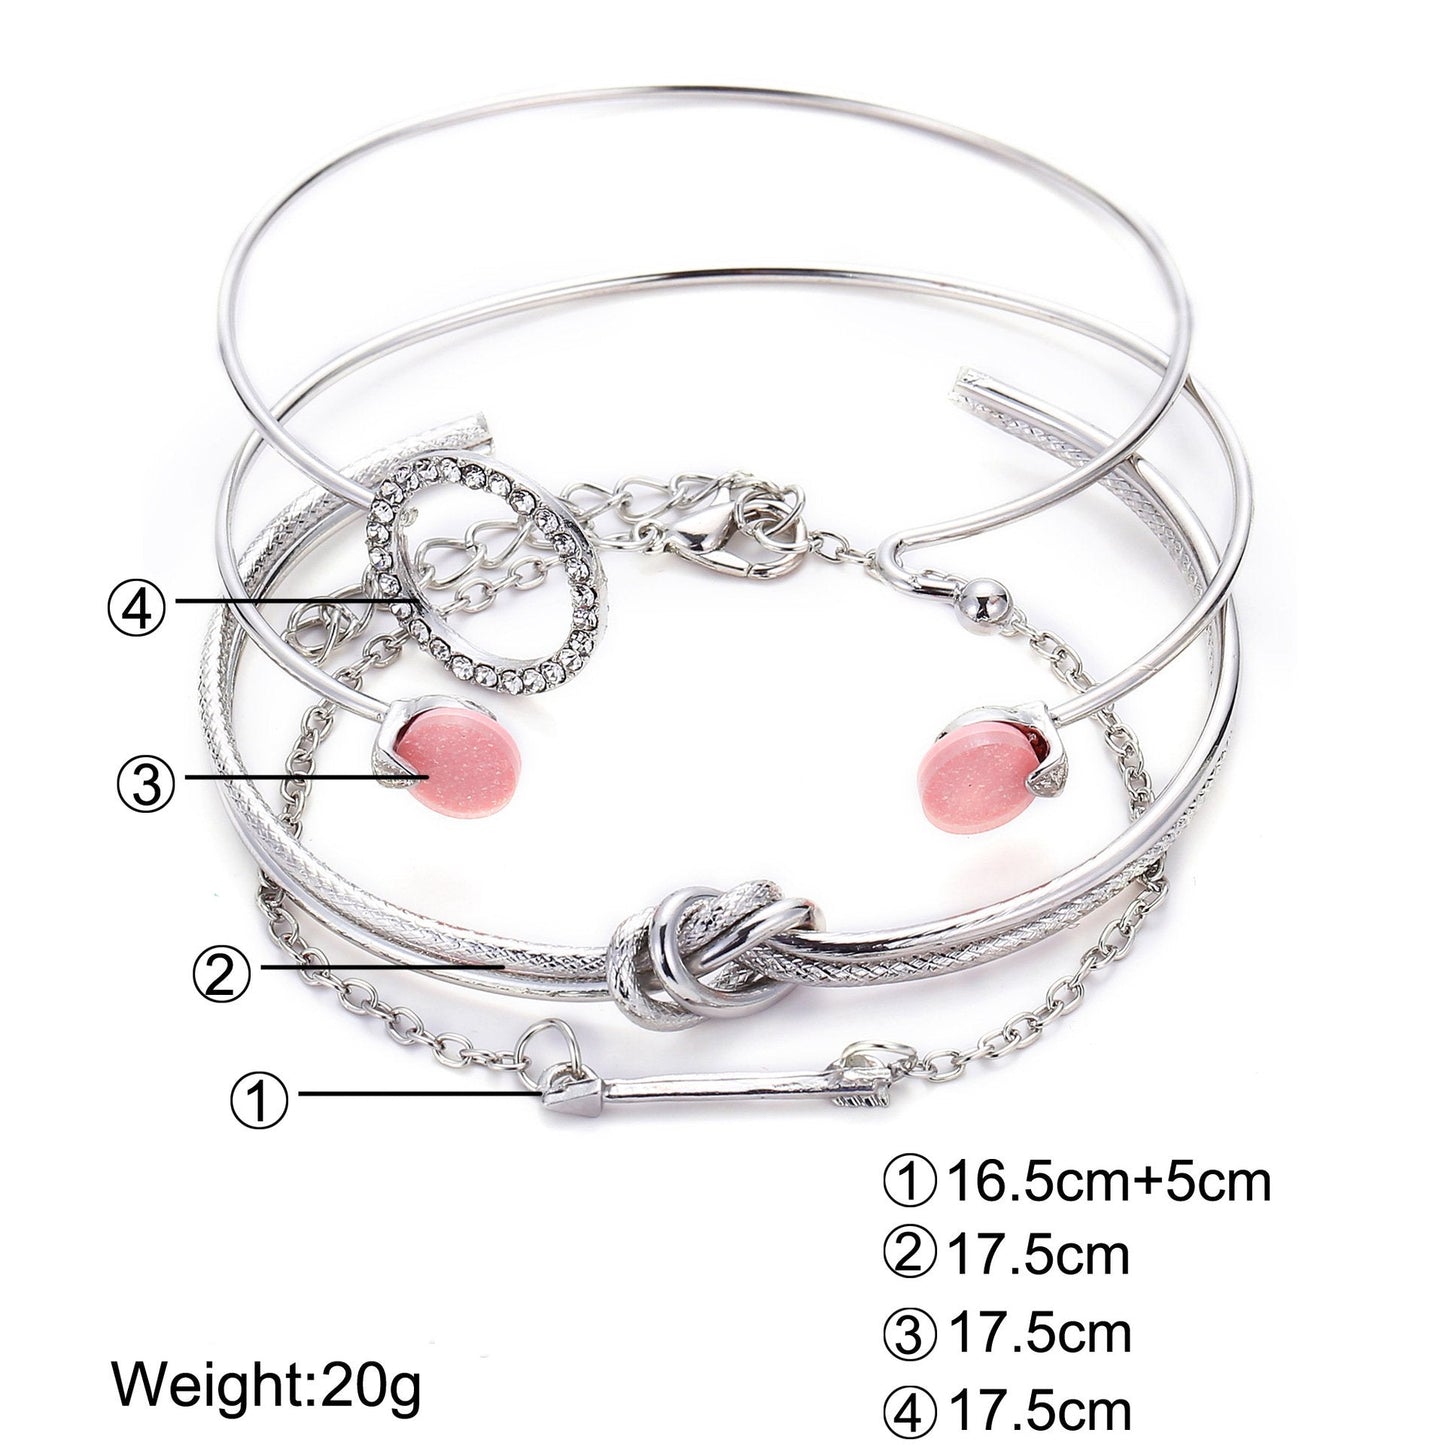 4 Piece Pink Bracelet Set With Crystals 18K White Gold Plated Bracelet